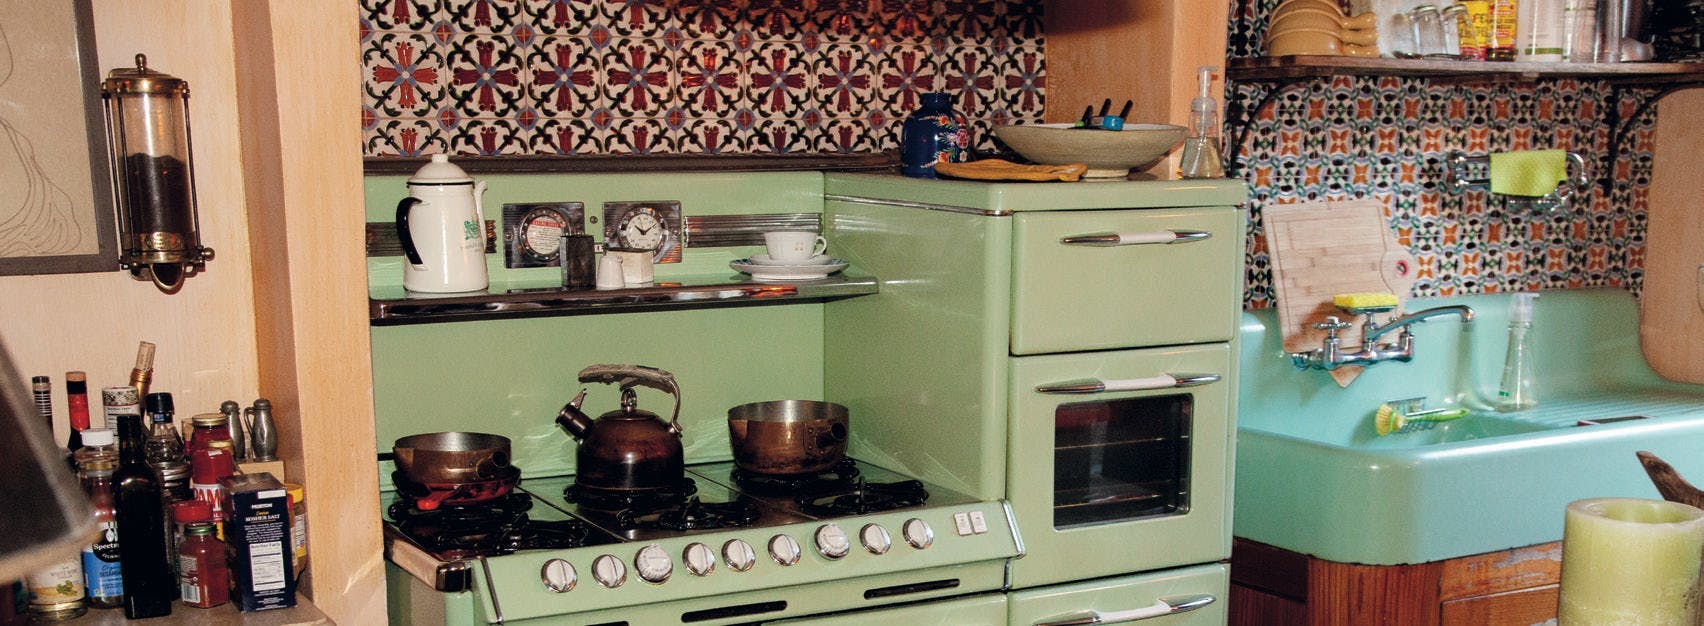 oven appliance indoors room